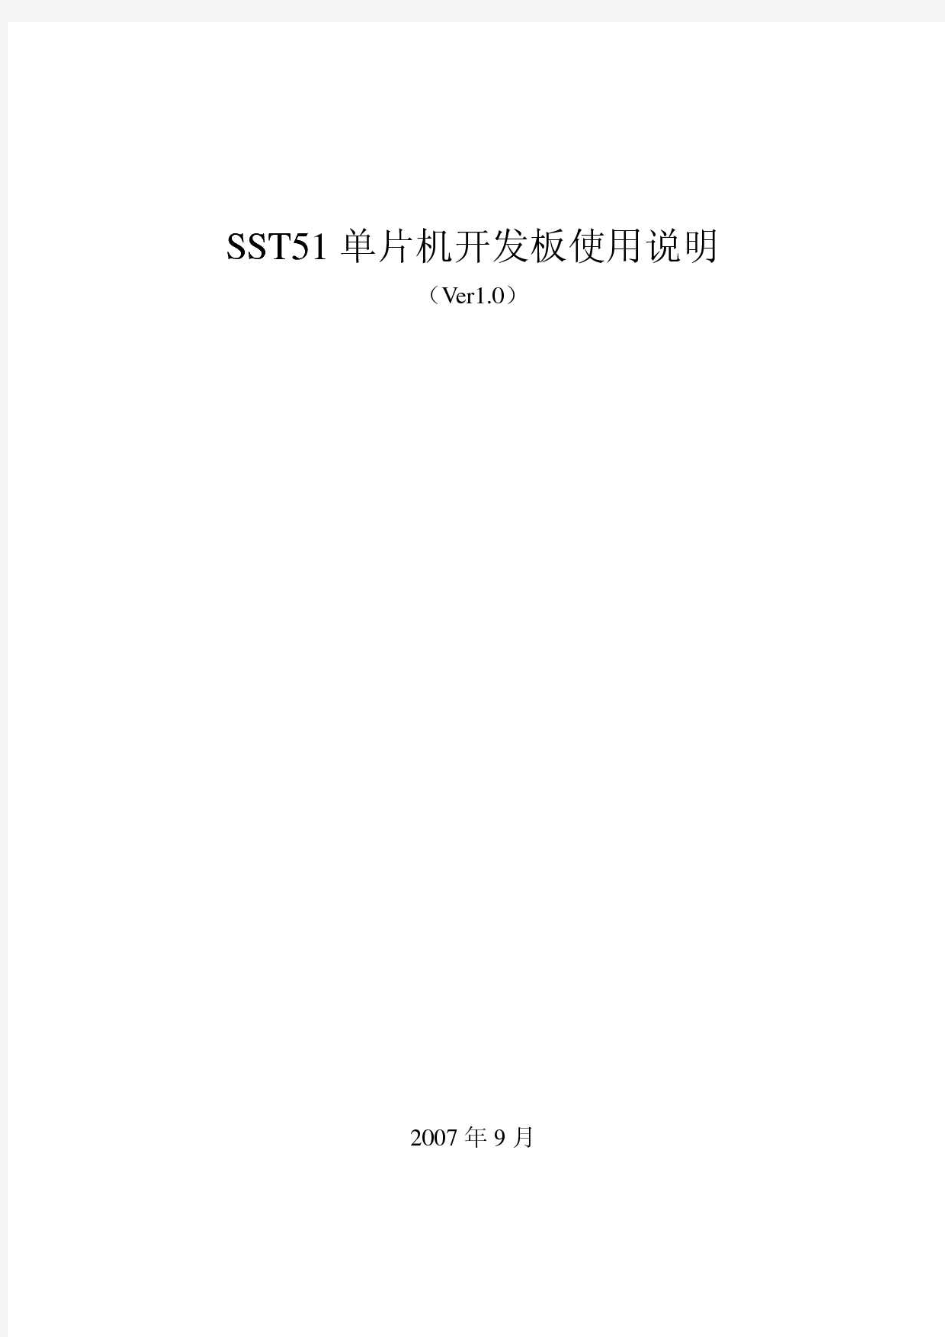 SST51单片机开发板使用说明